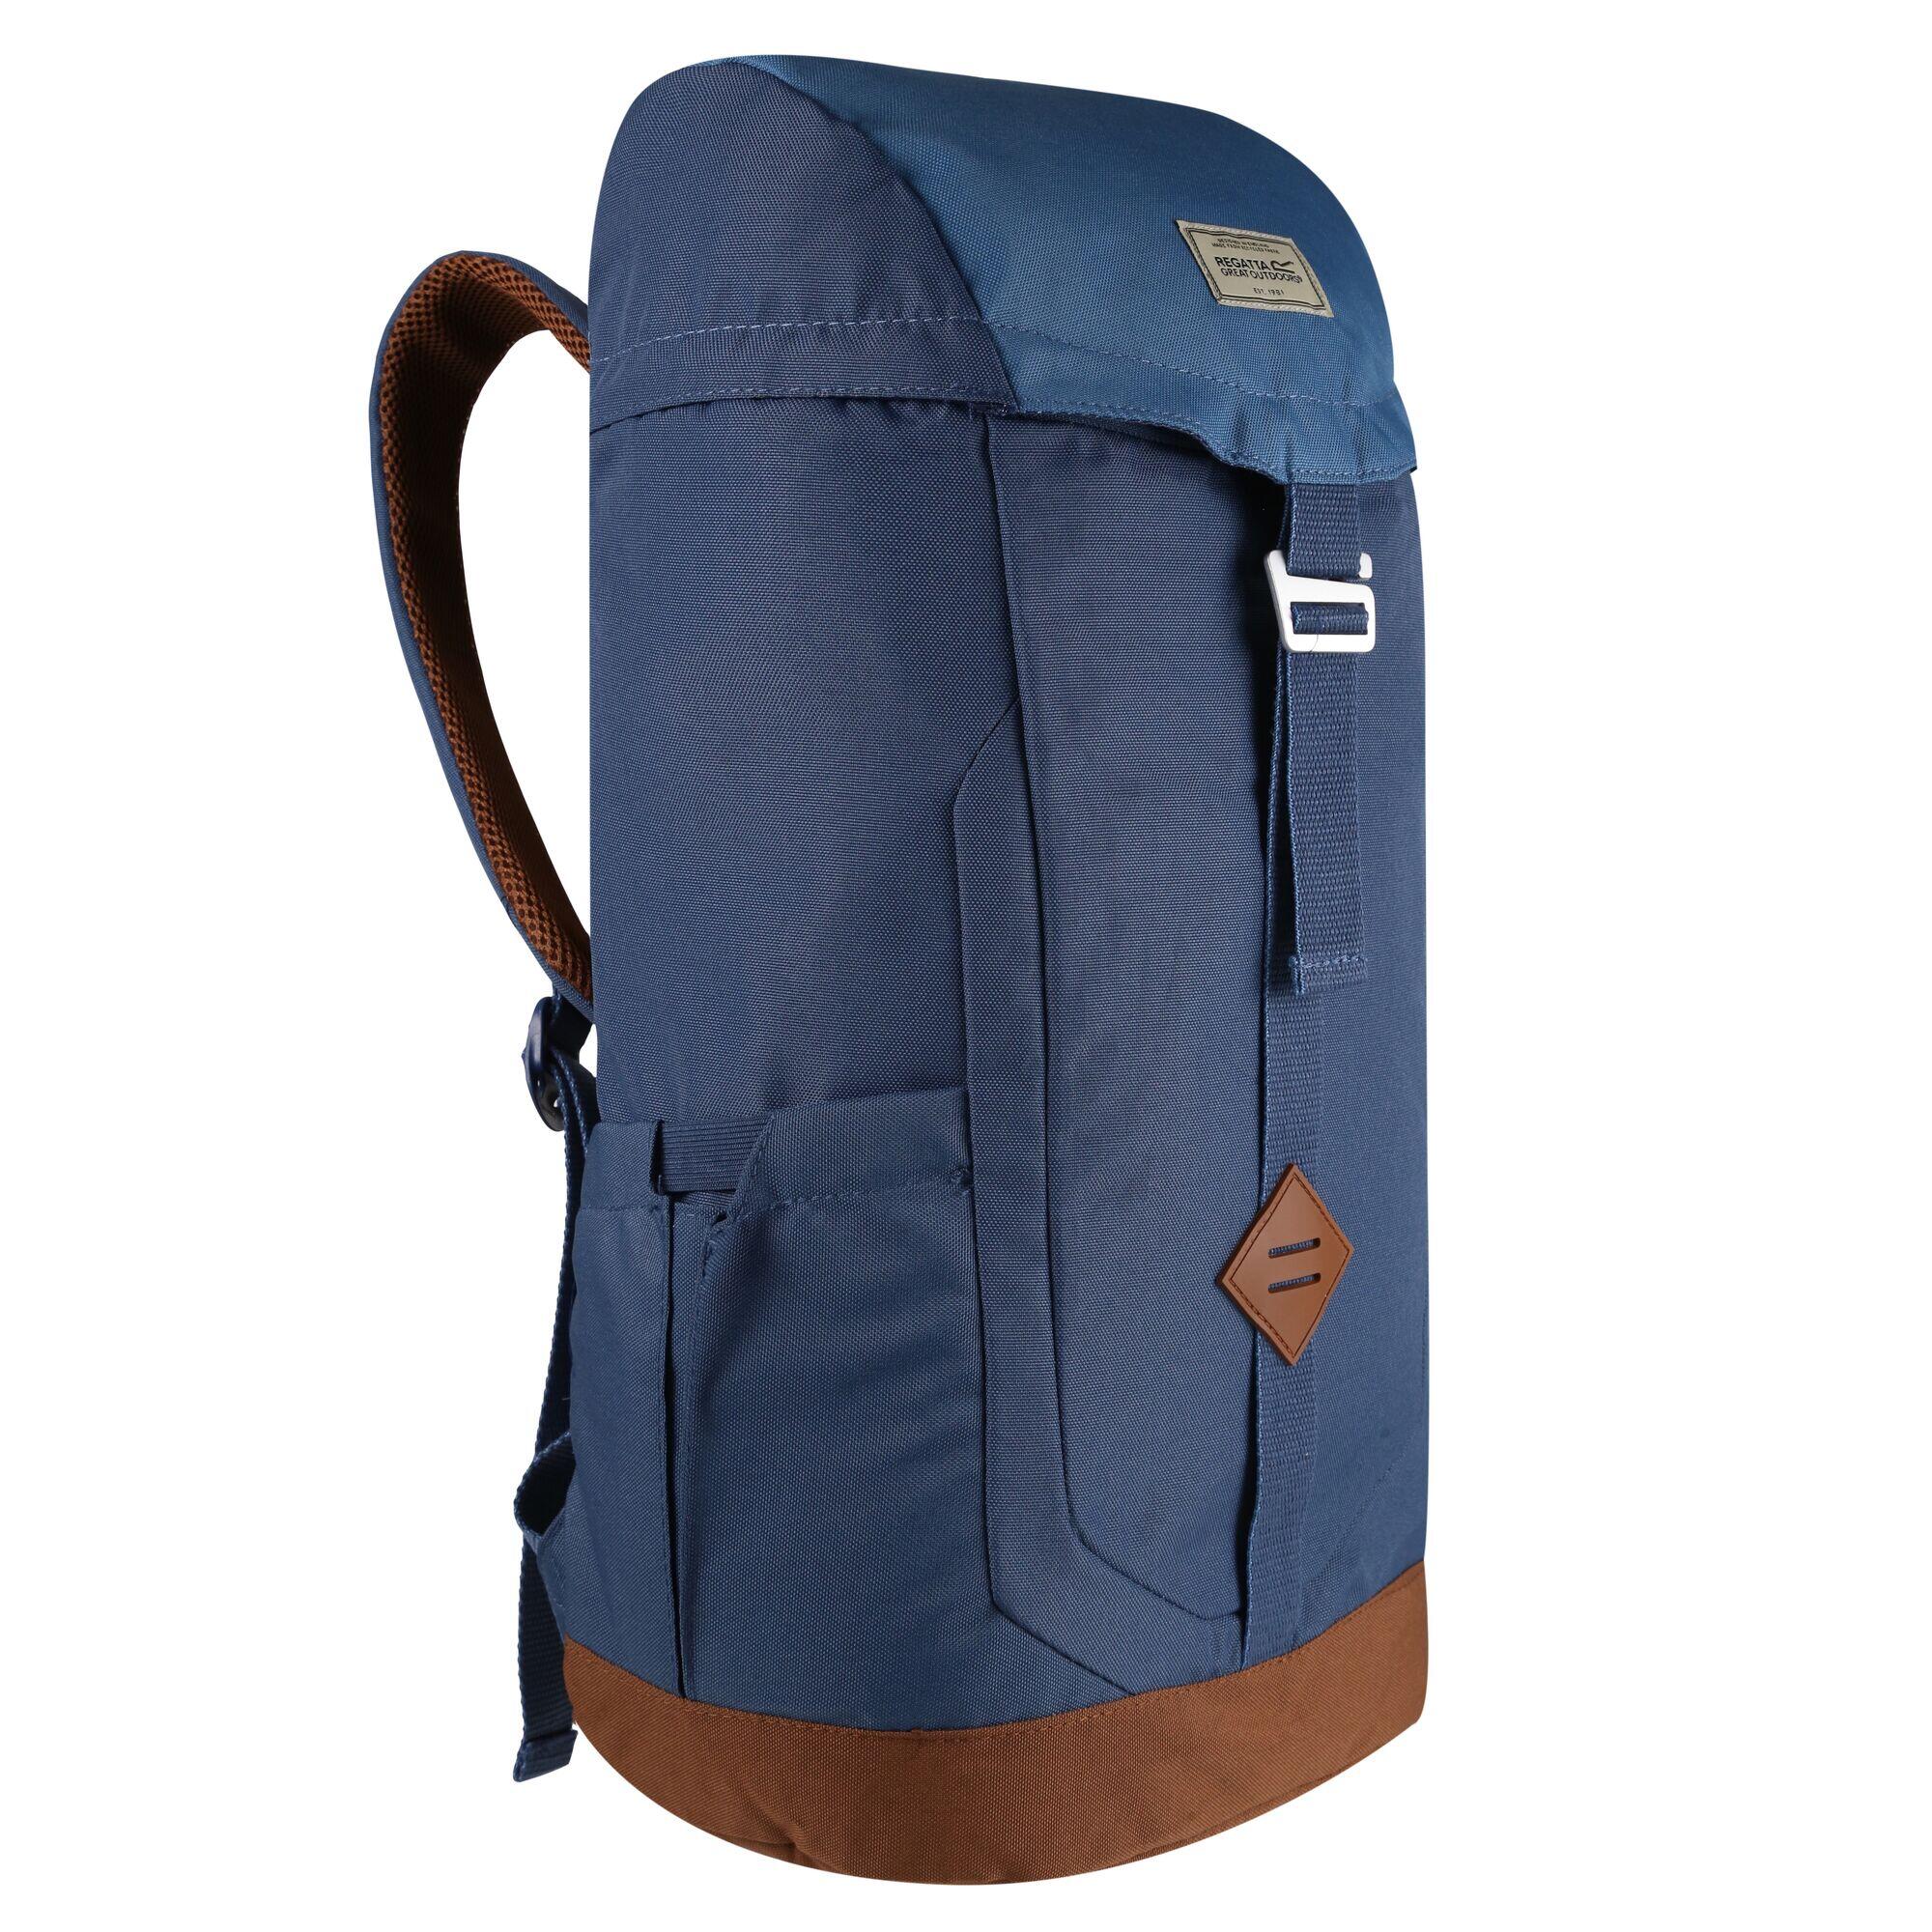 Stamford 25L Adults' Unisex Hiking Backpack - Dark Denim 2/3